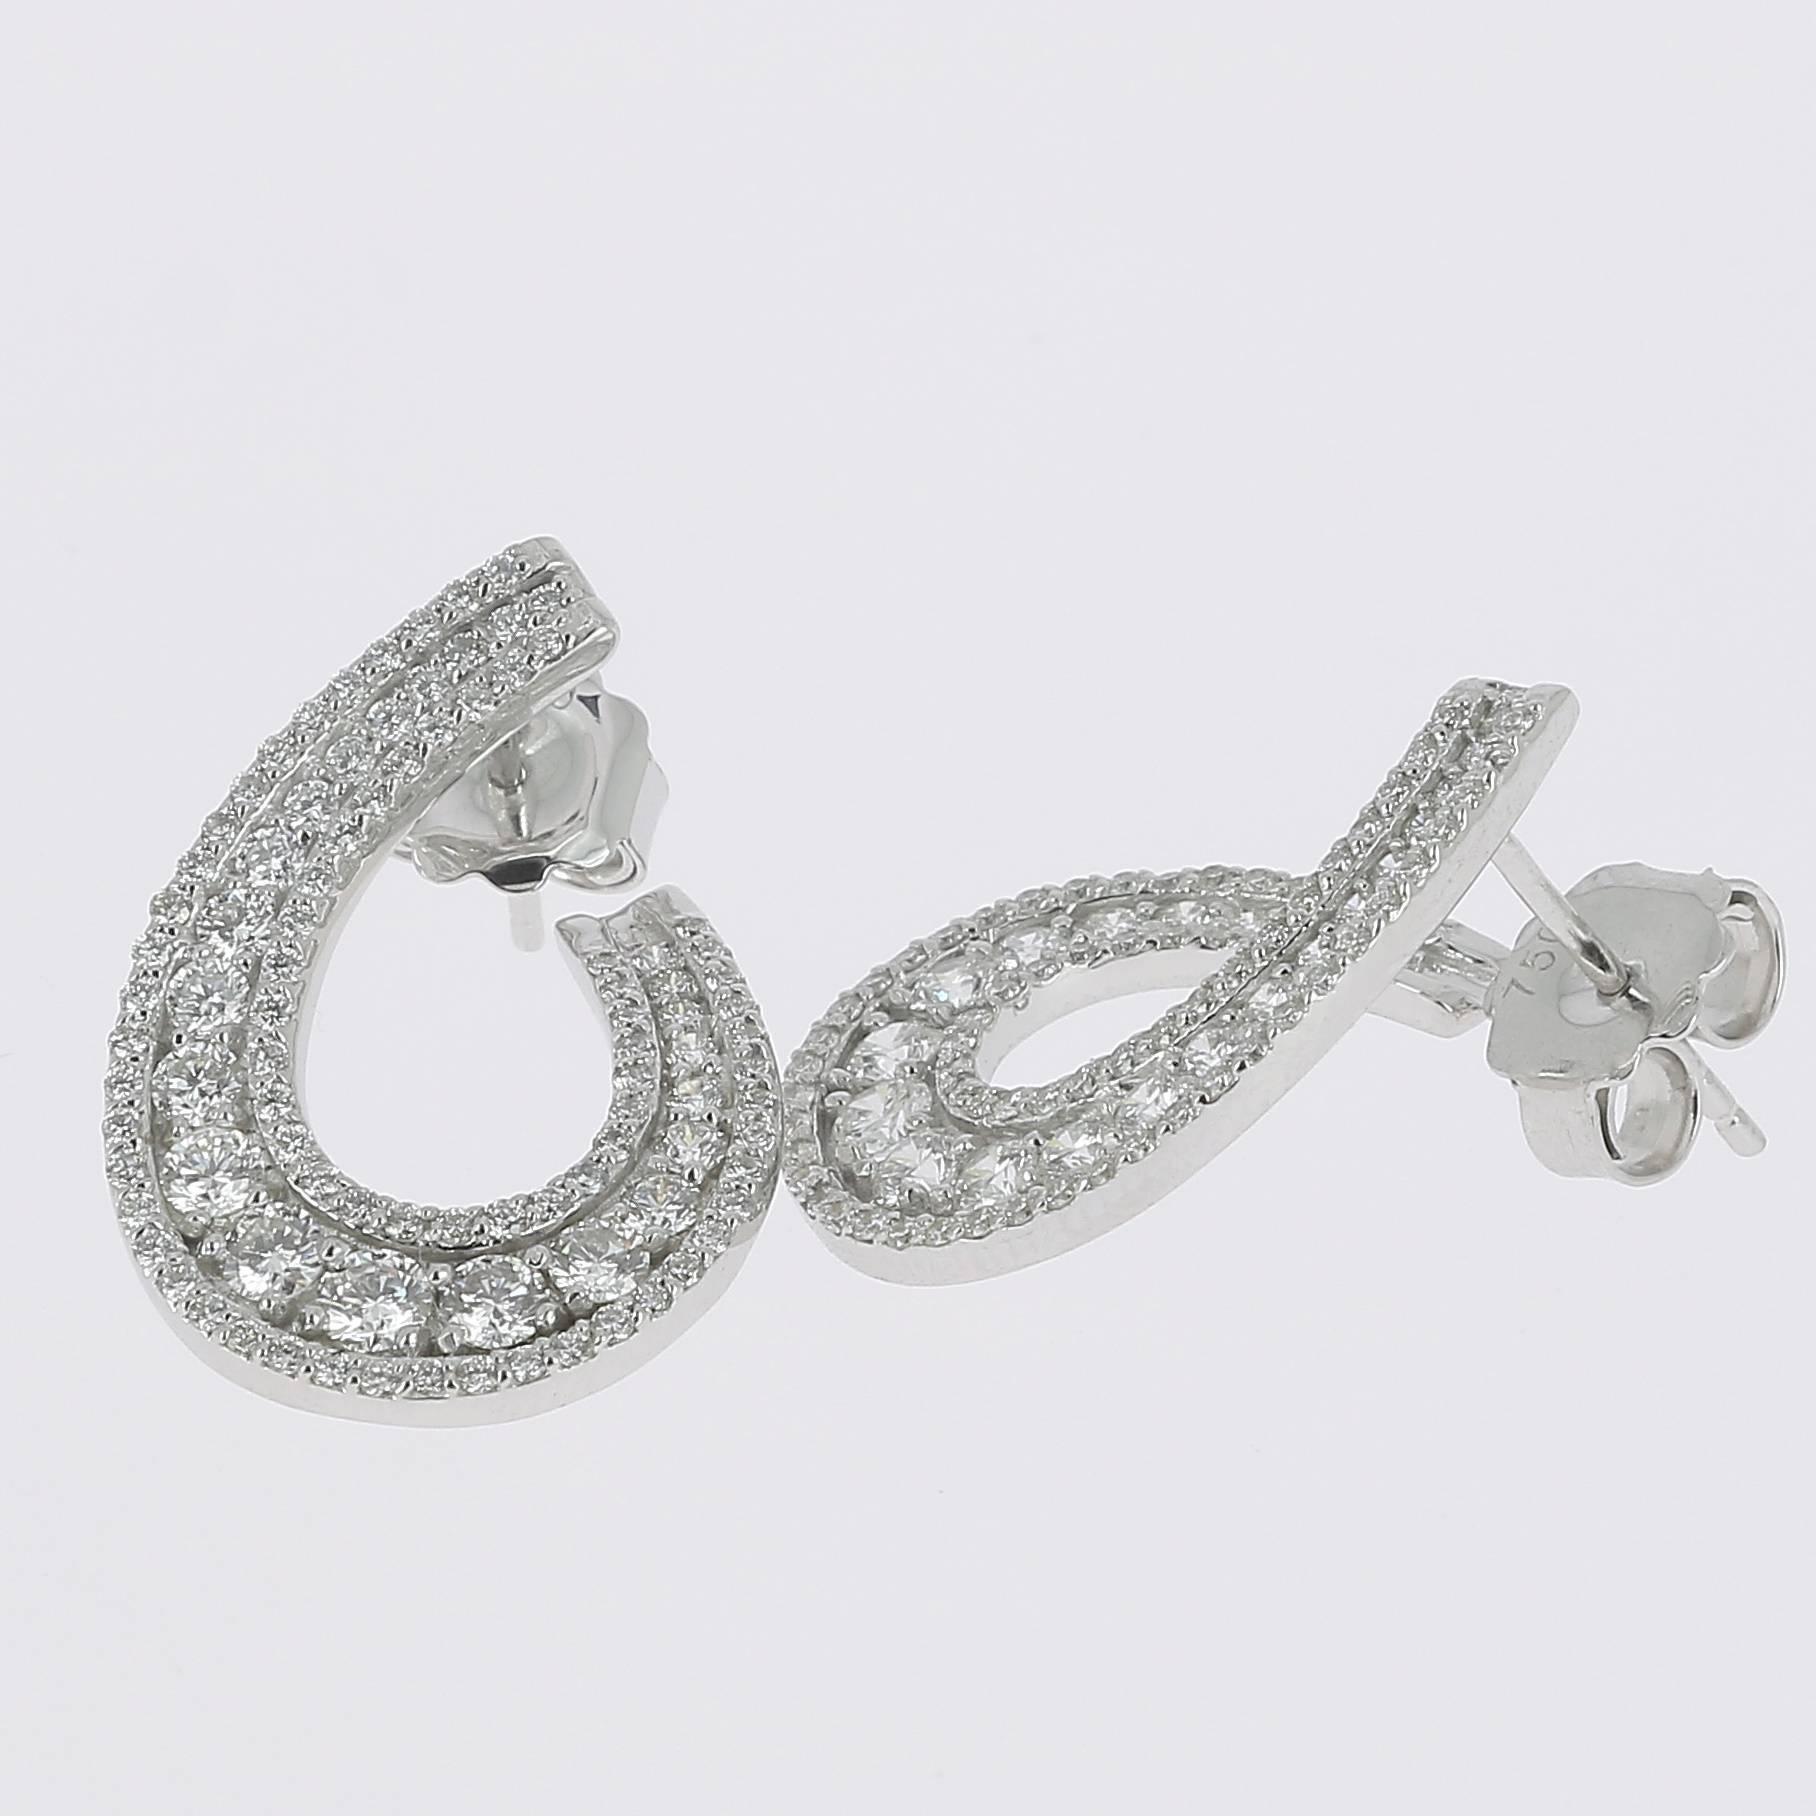 Contemporary  1.97 carats GVS Round Diamonds Swirl Earring 18K White Gold Stud Earrings